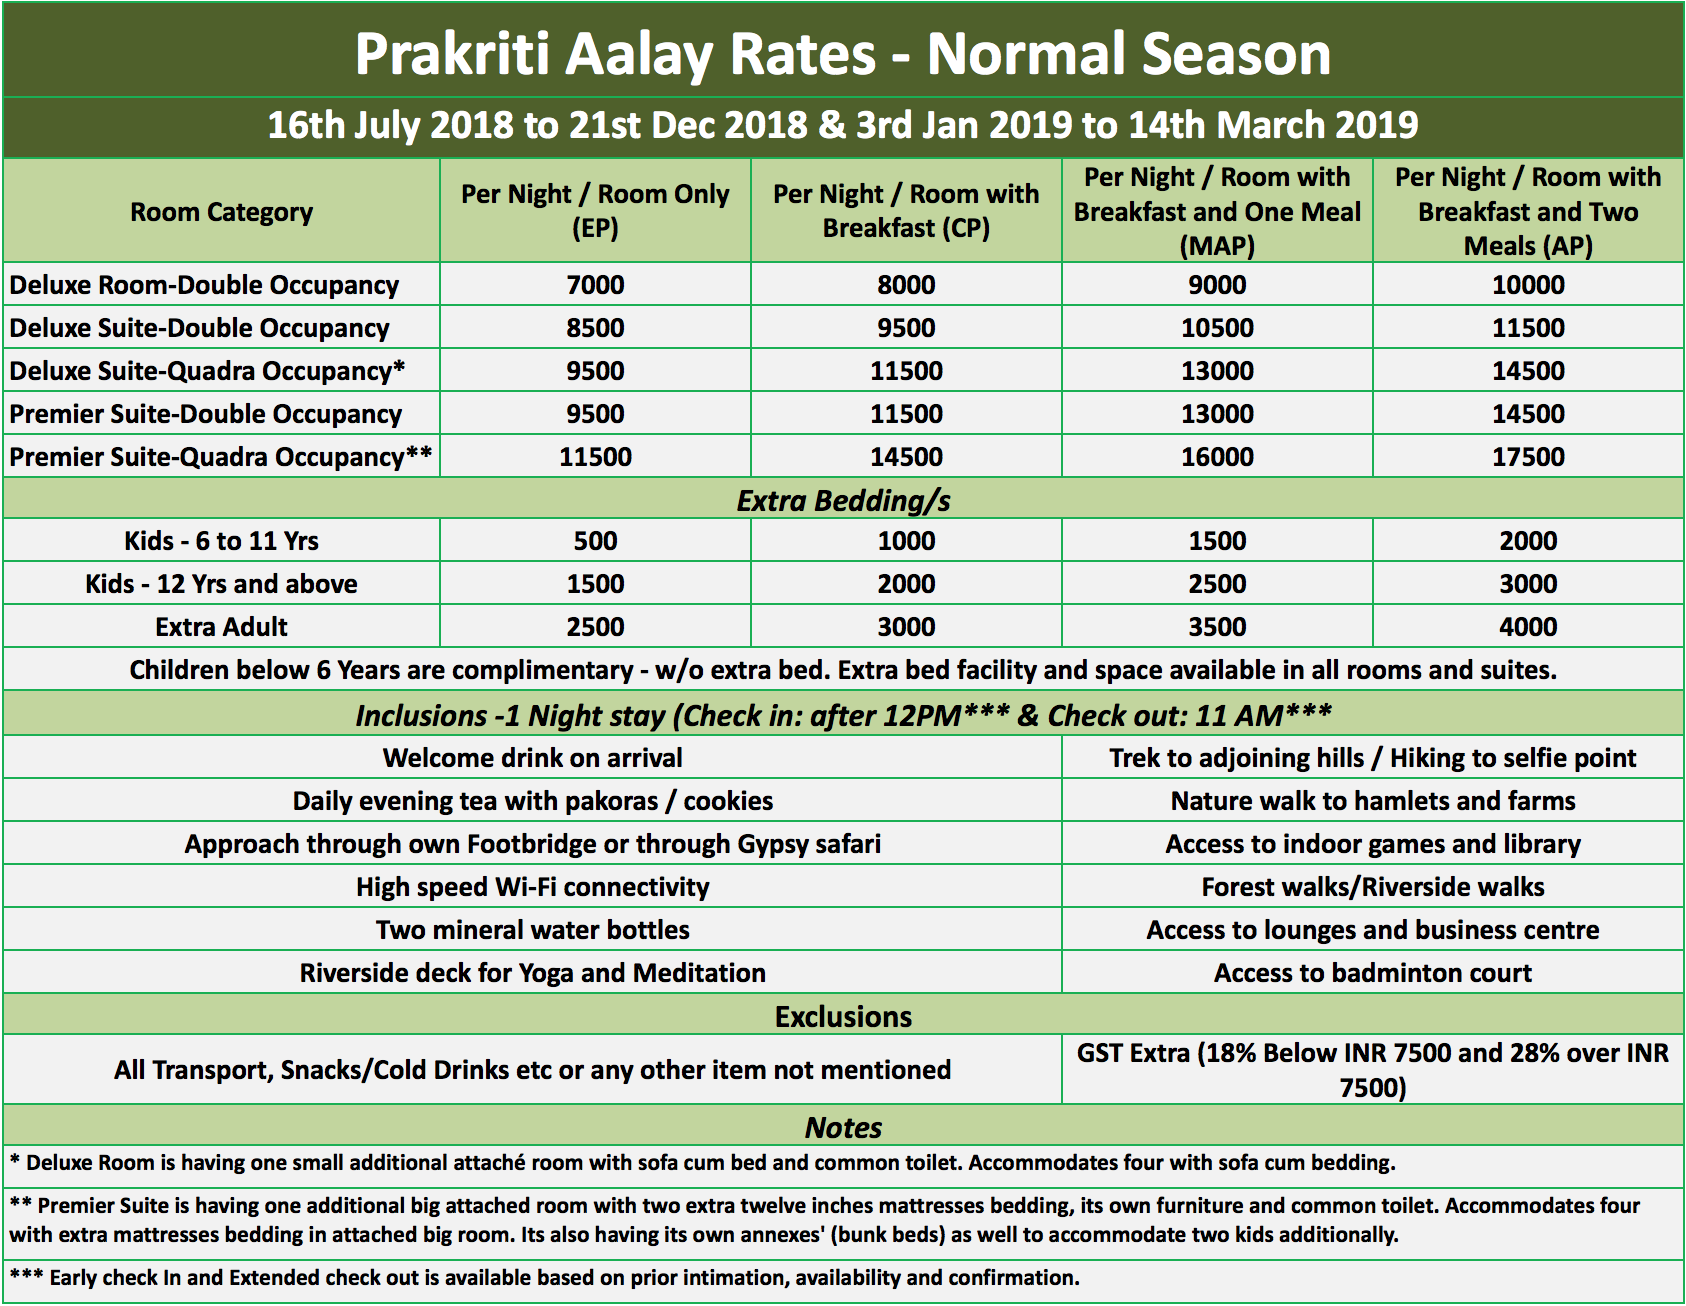 Normal Season Rates : Prakrity Aalay